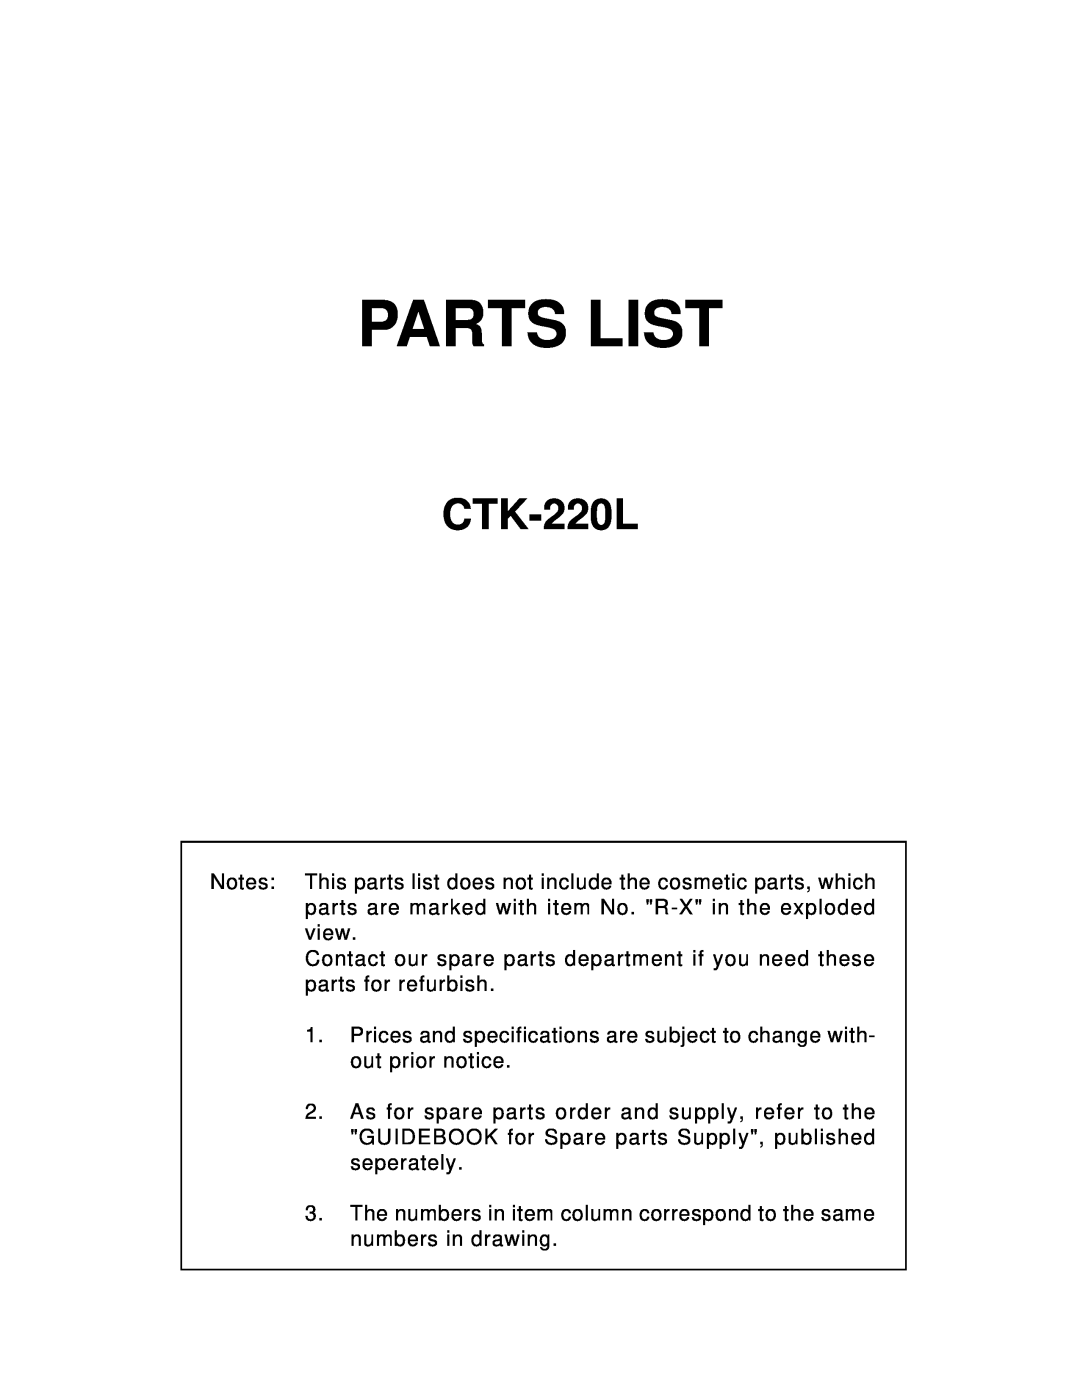 Casio CTK-220L manual Parts List 